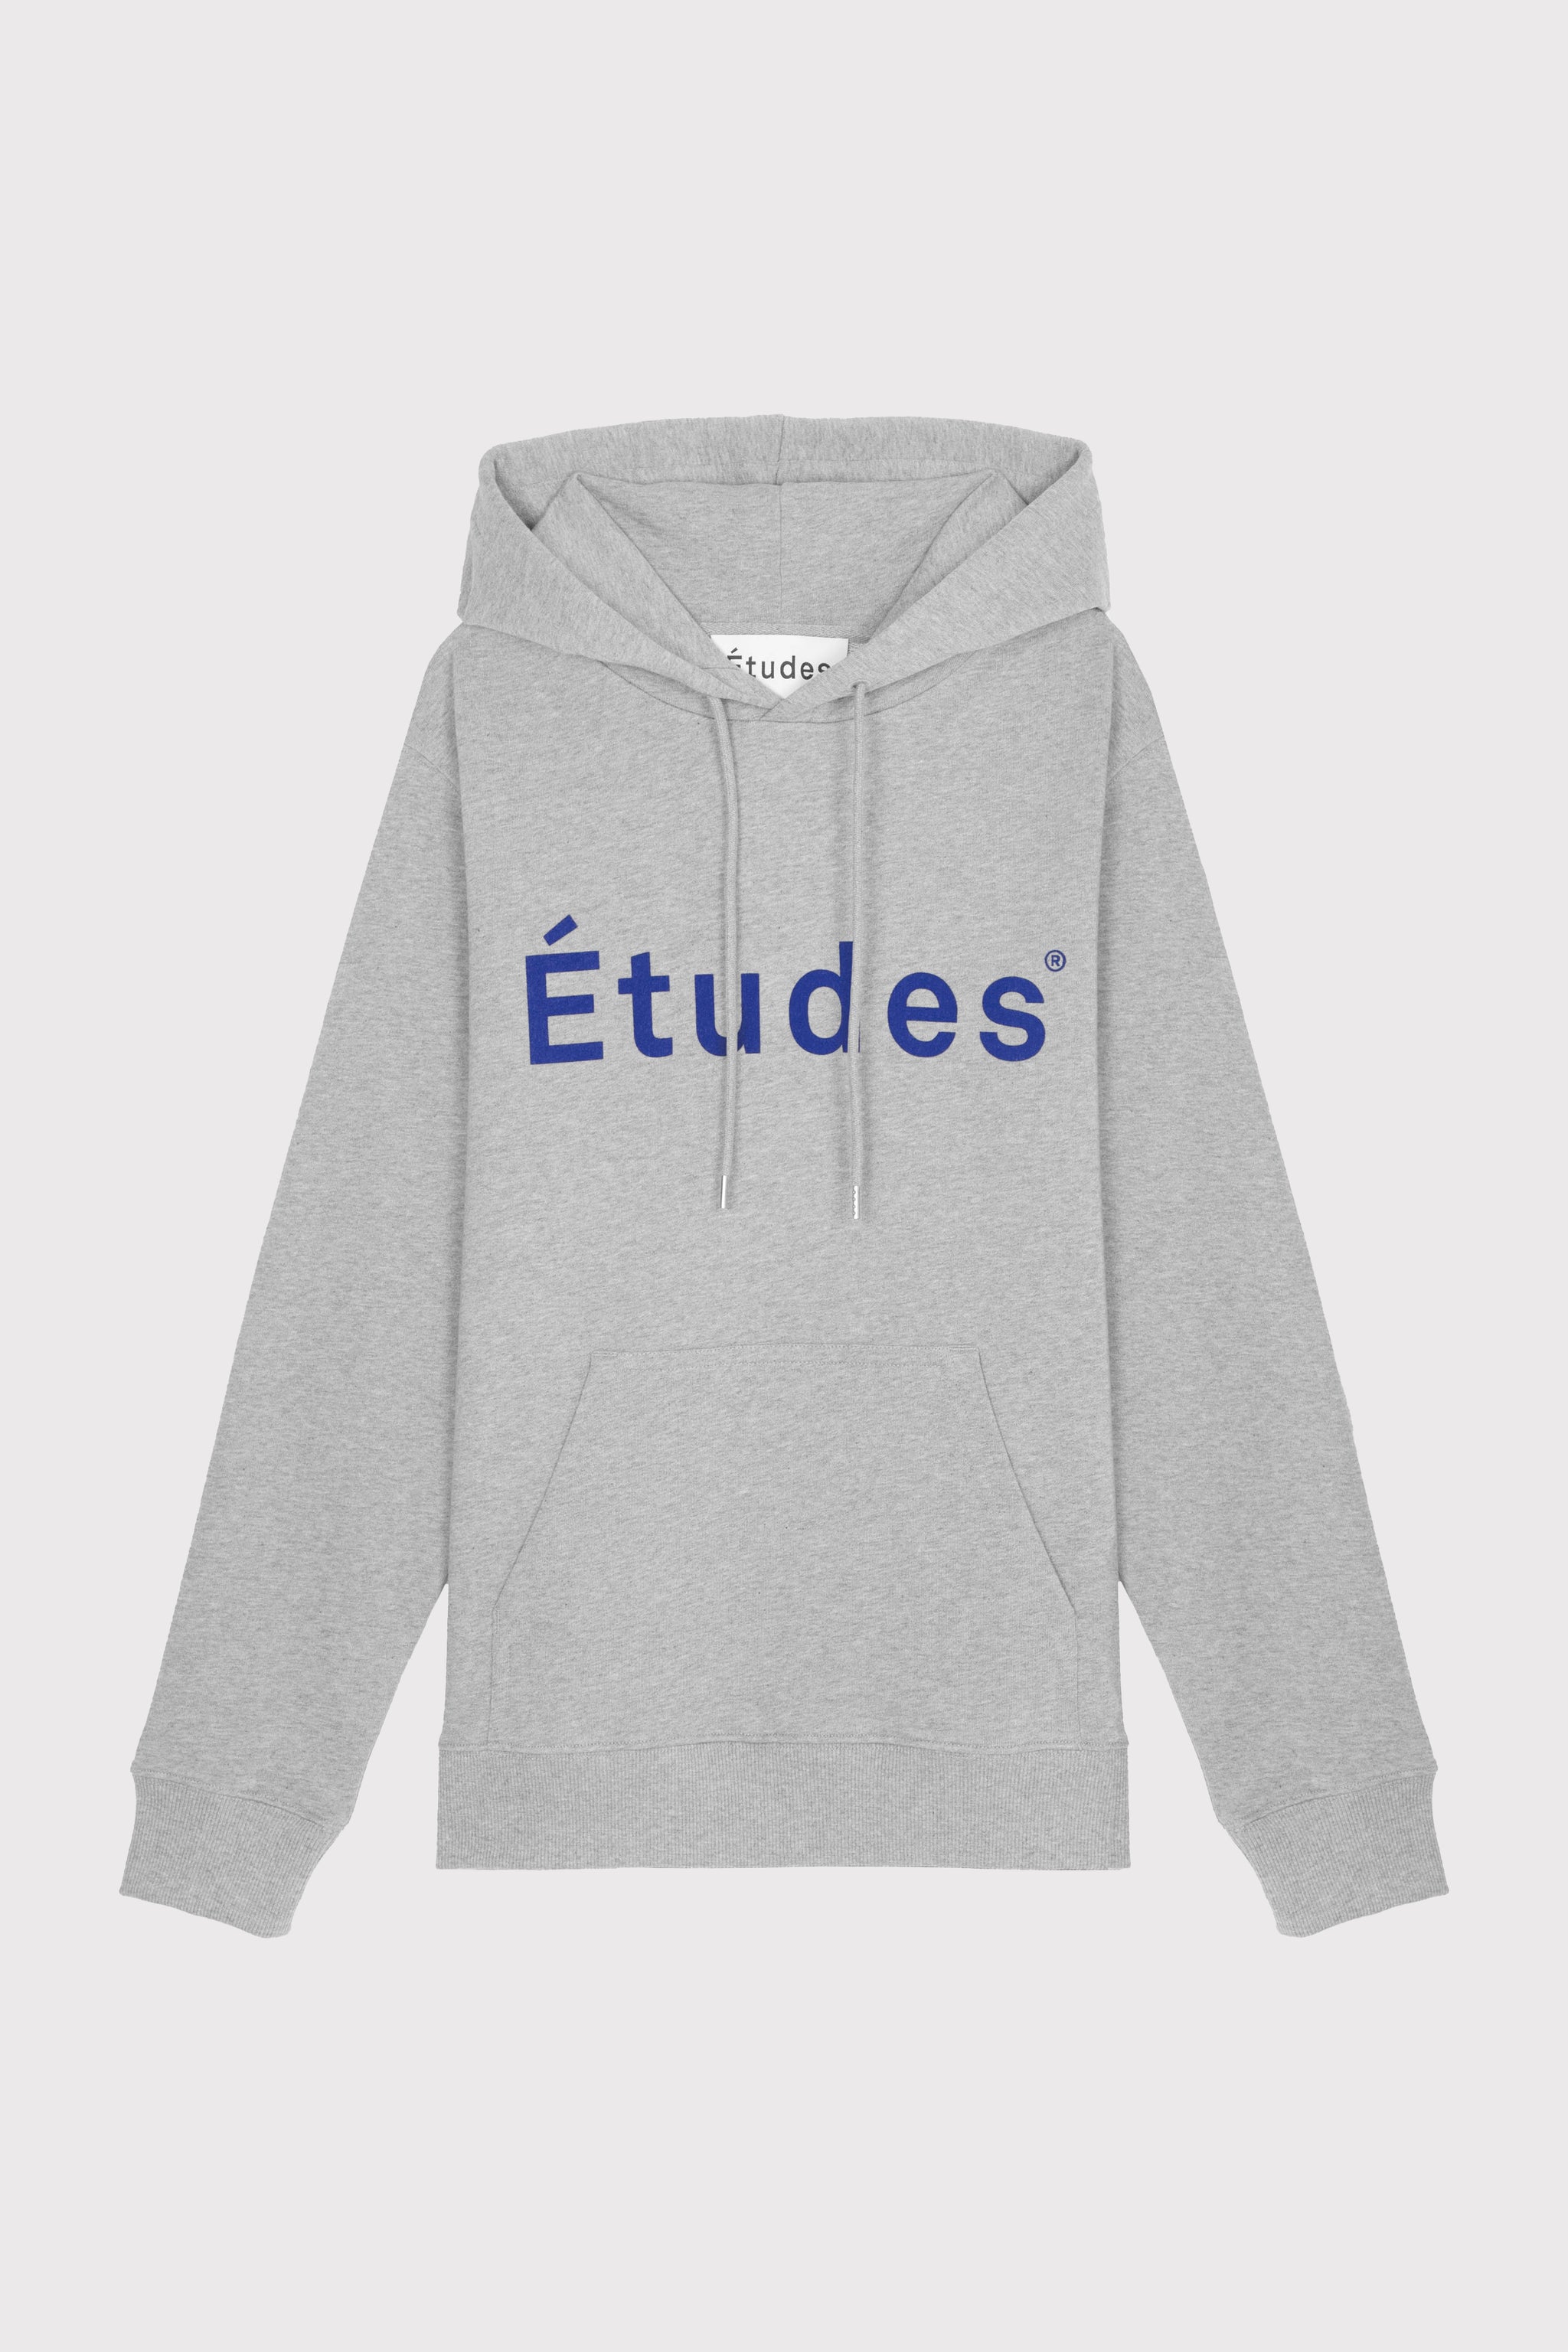 Études HOODIE ETUDES HEATHER GREY Sweatshirt 2